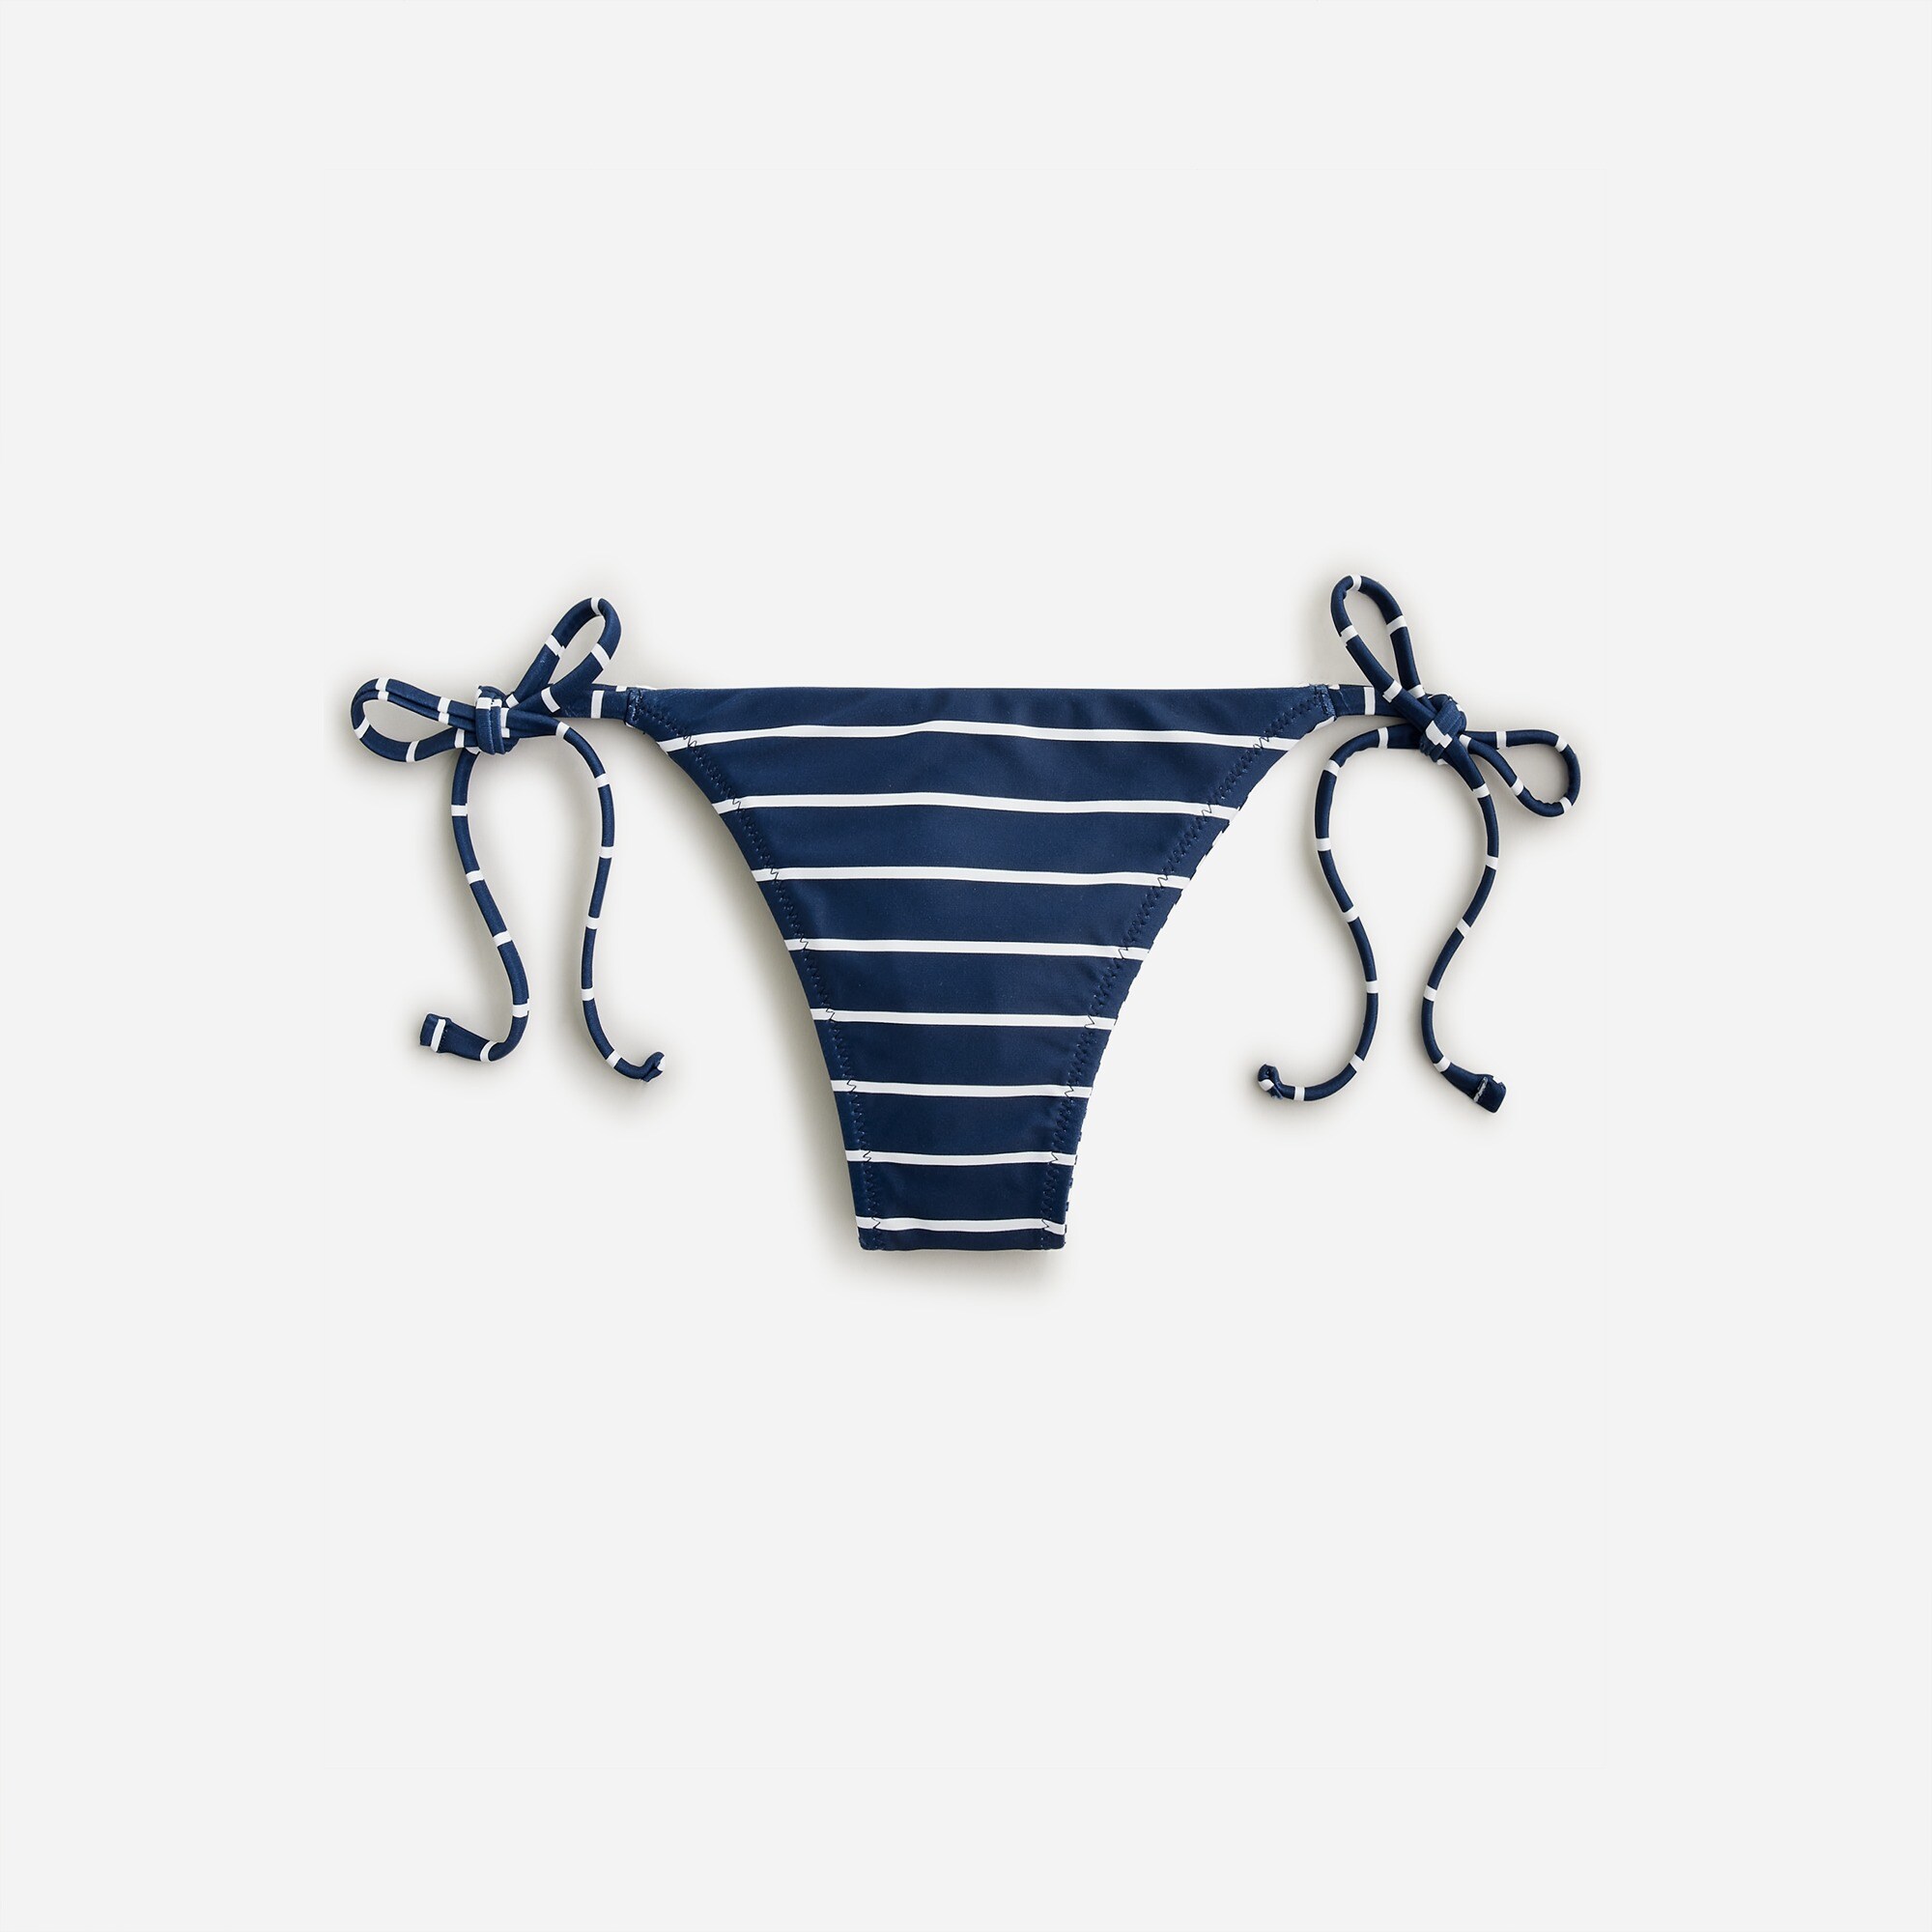  String hipster full-coverage bikini bottom in reversible navy stripe